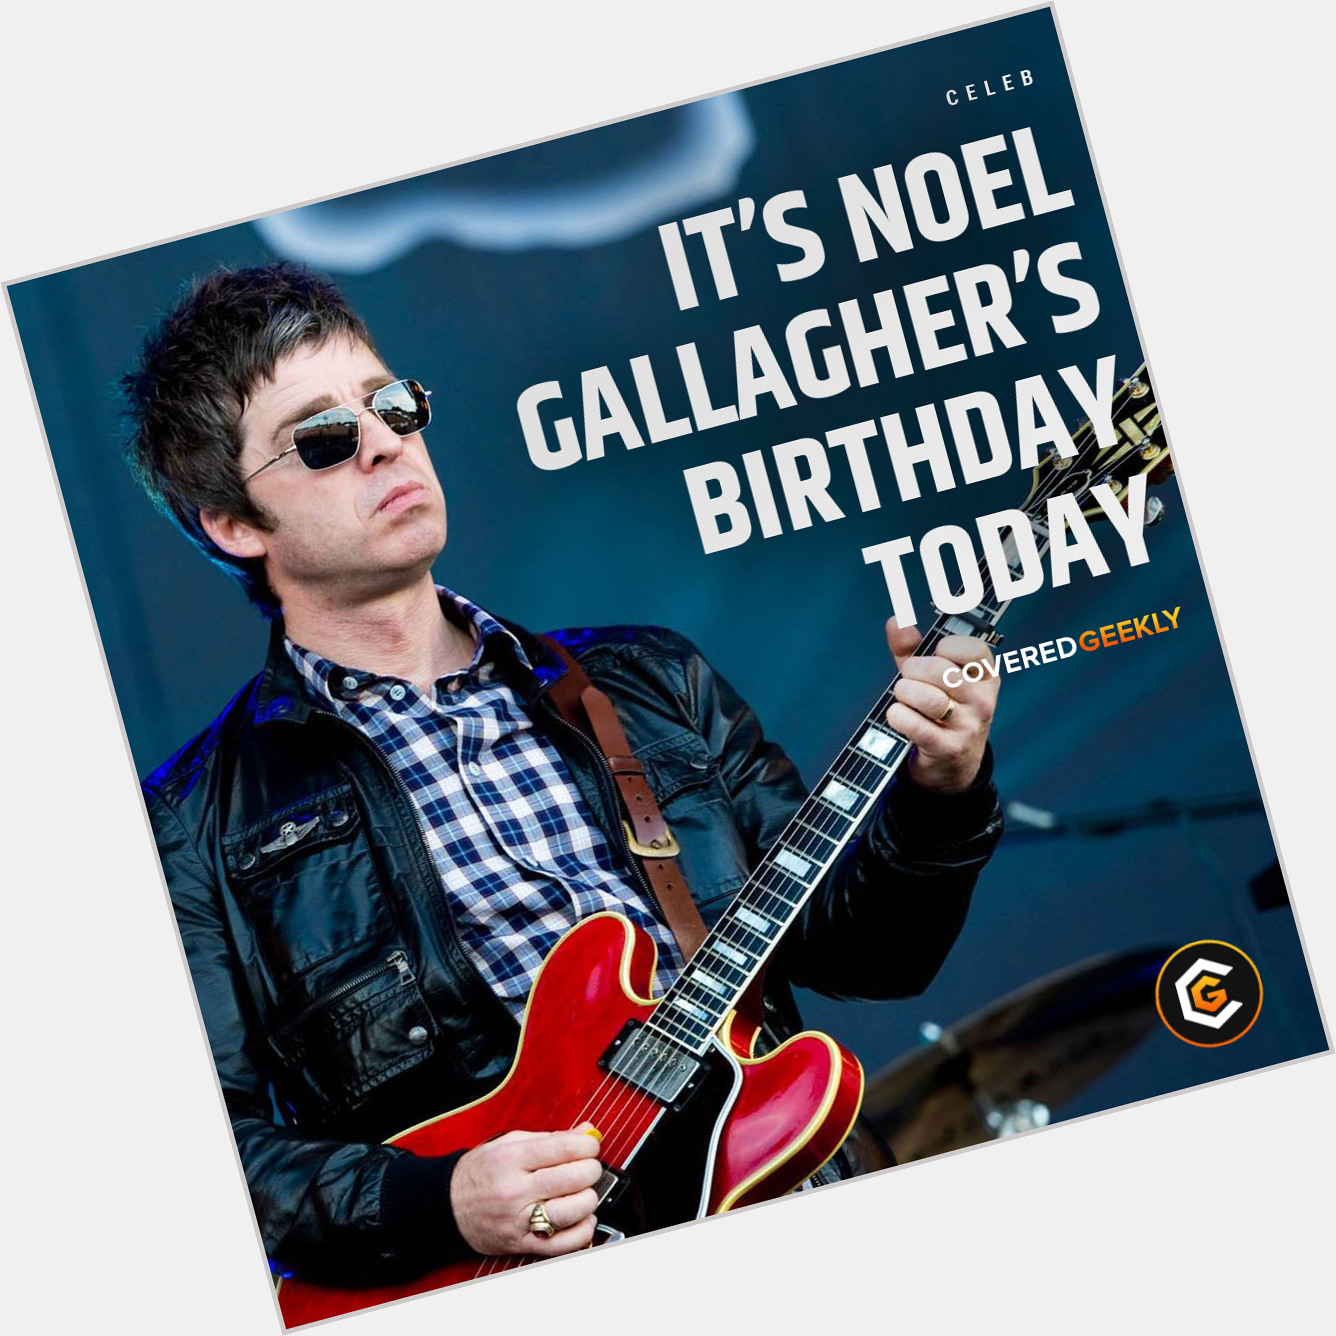 Happy Birthday to Noel Gallagher! 